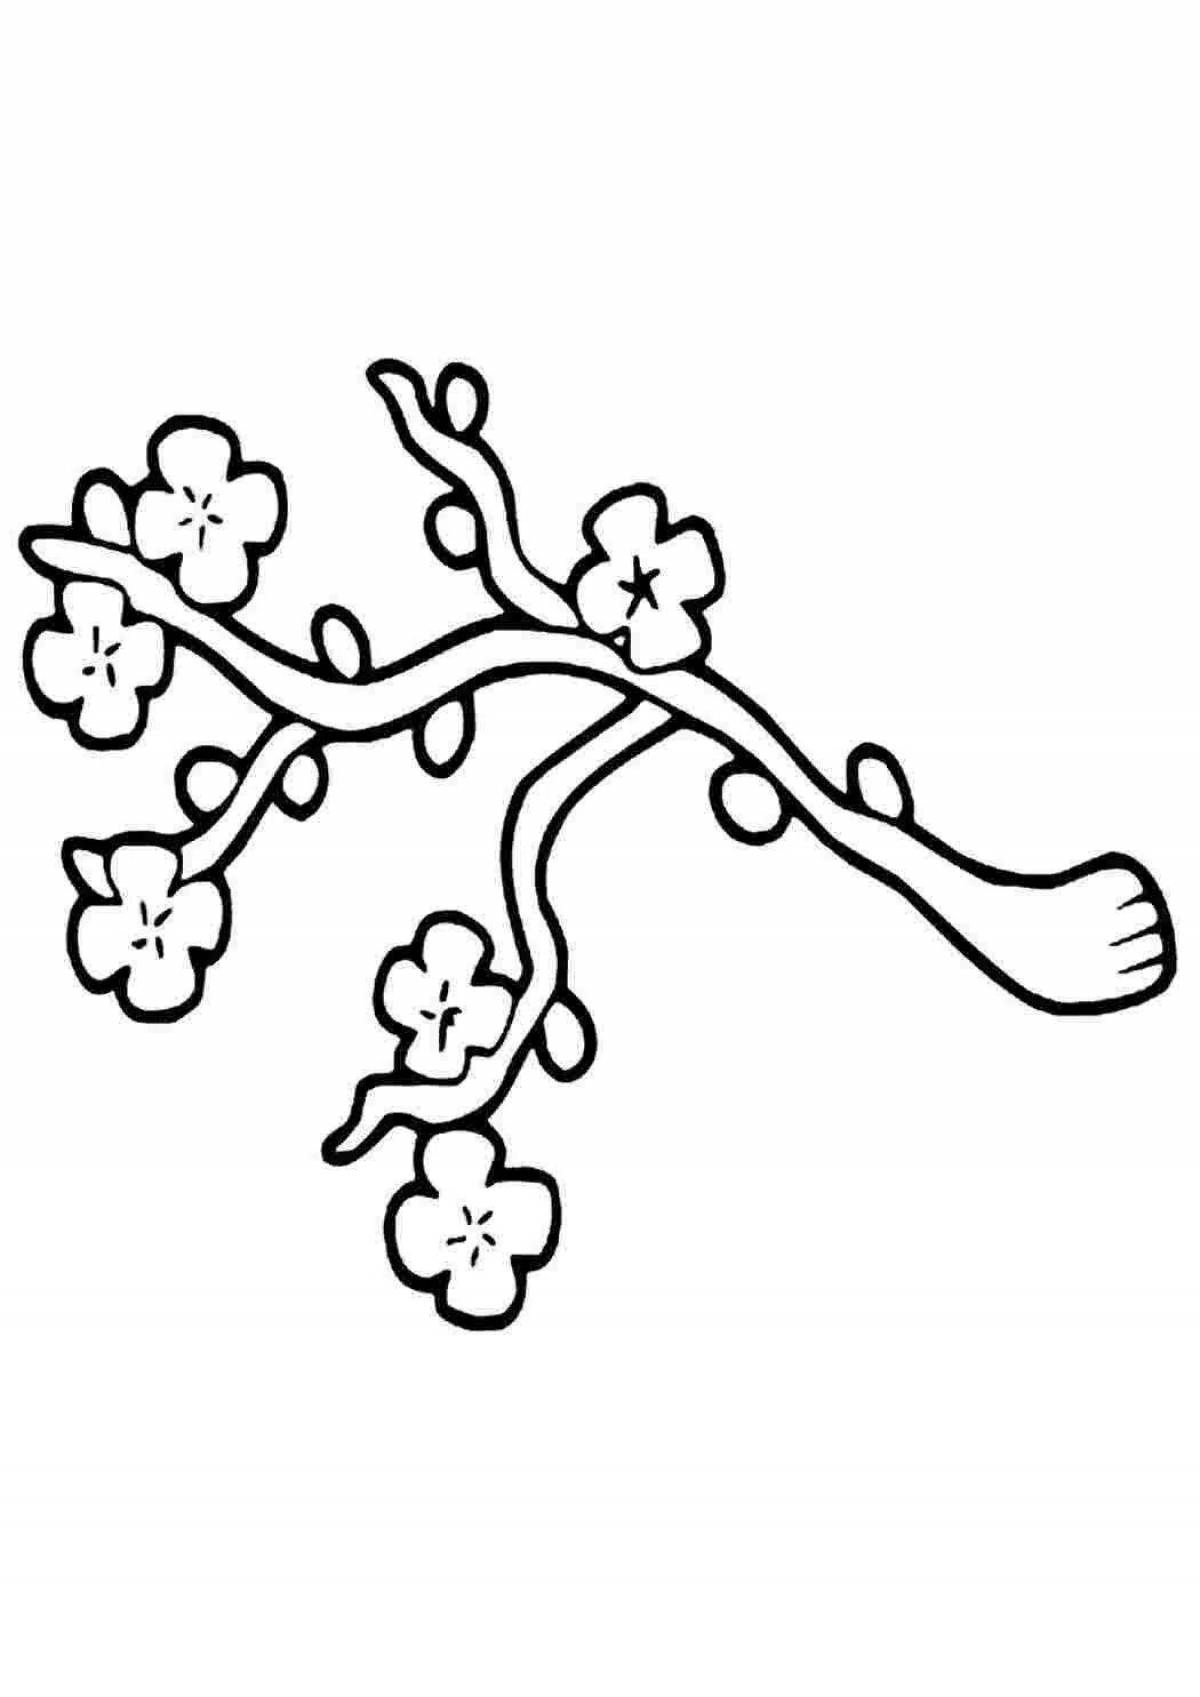 Fancy sakura branch coloring page